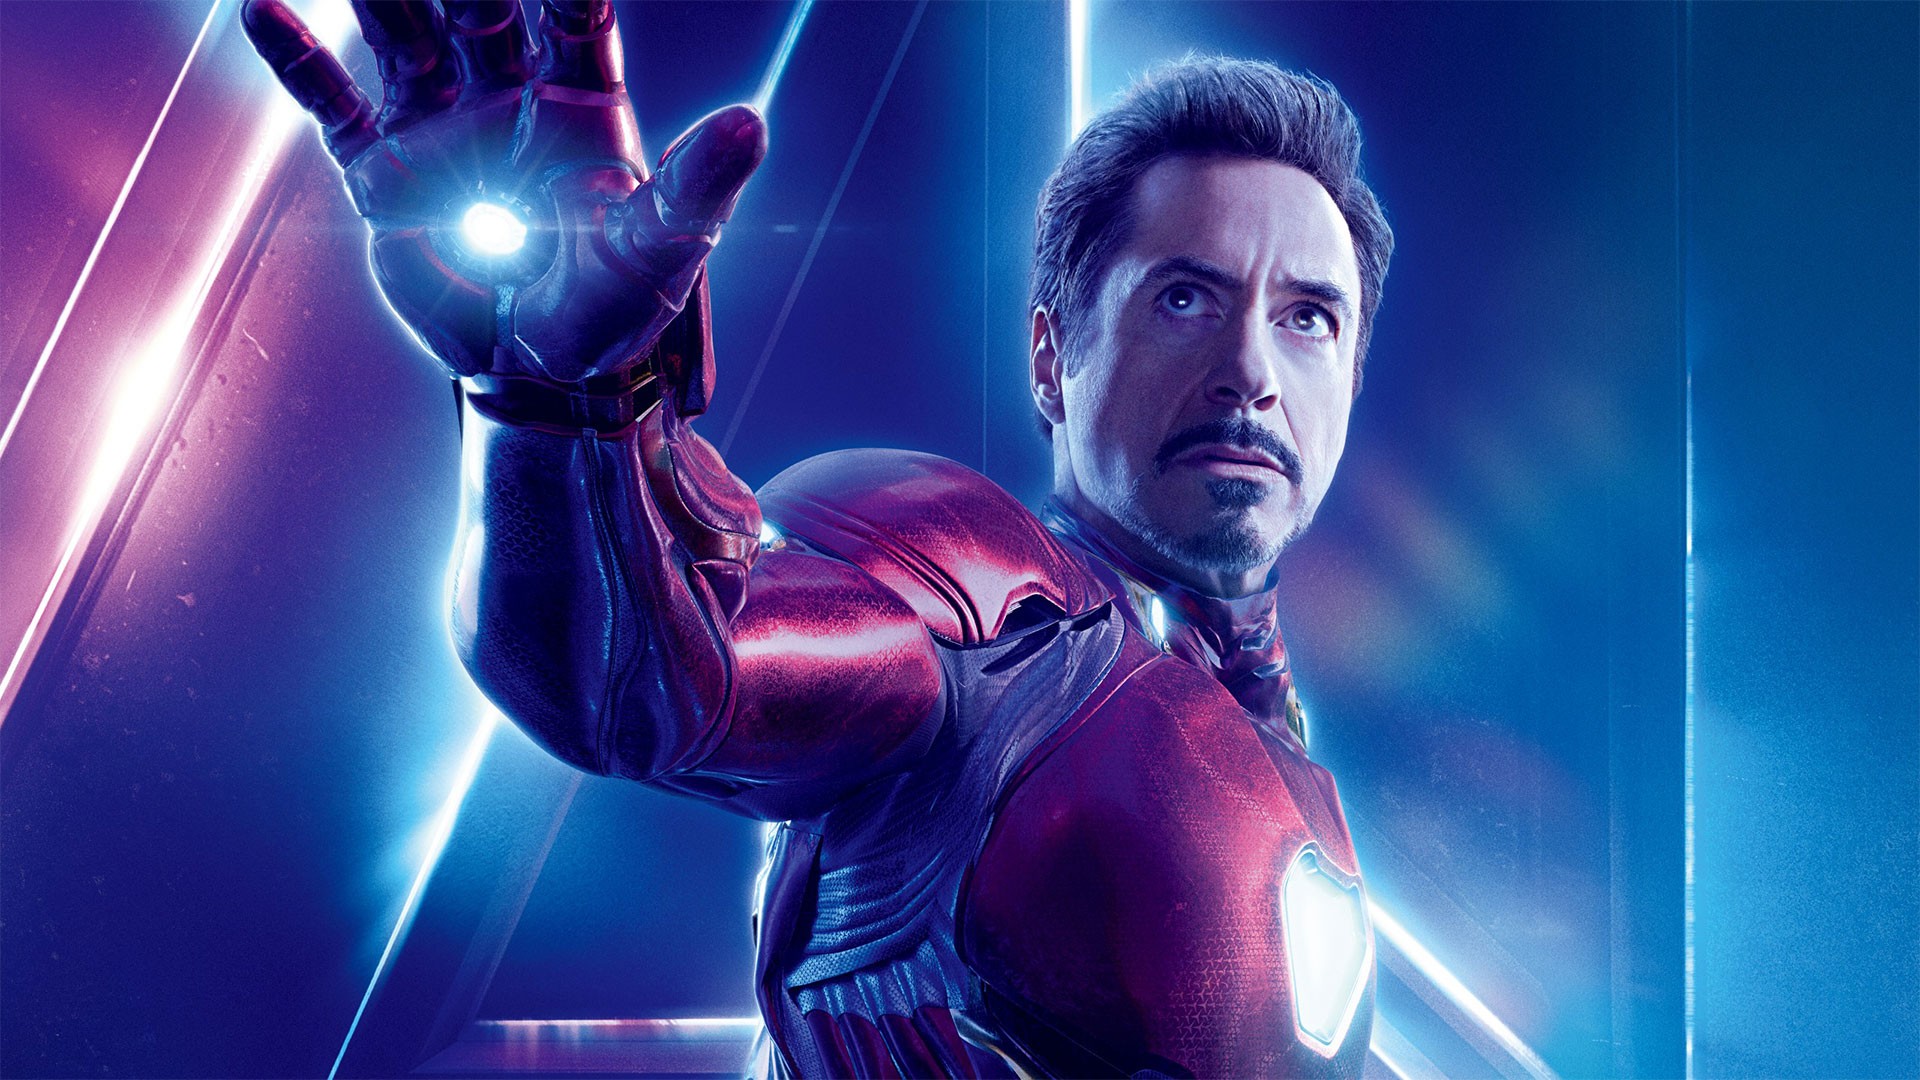 Iron Man Avengers Endgame Wallpaper HD Movie Poster